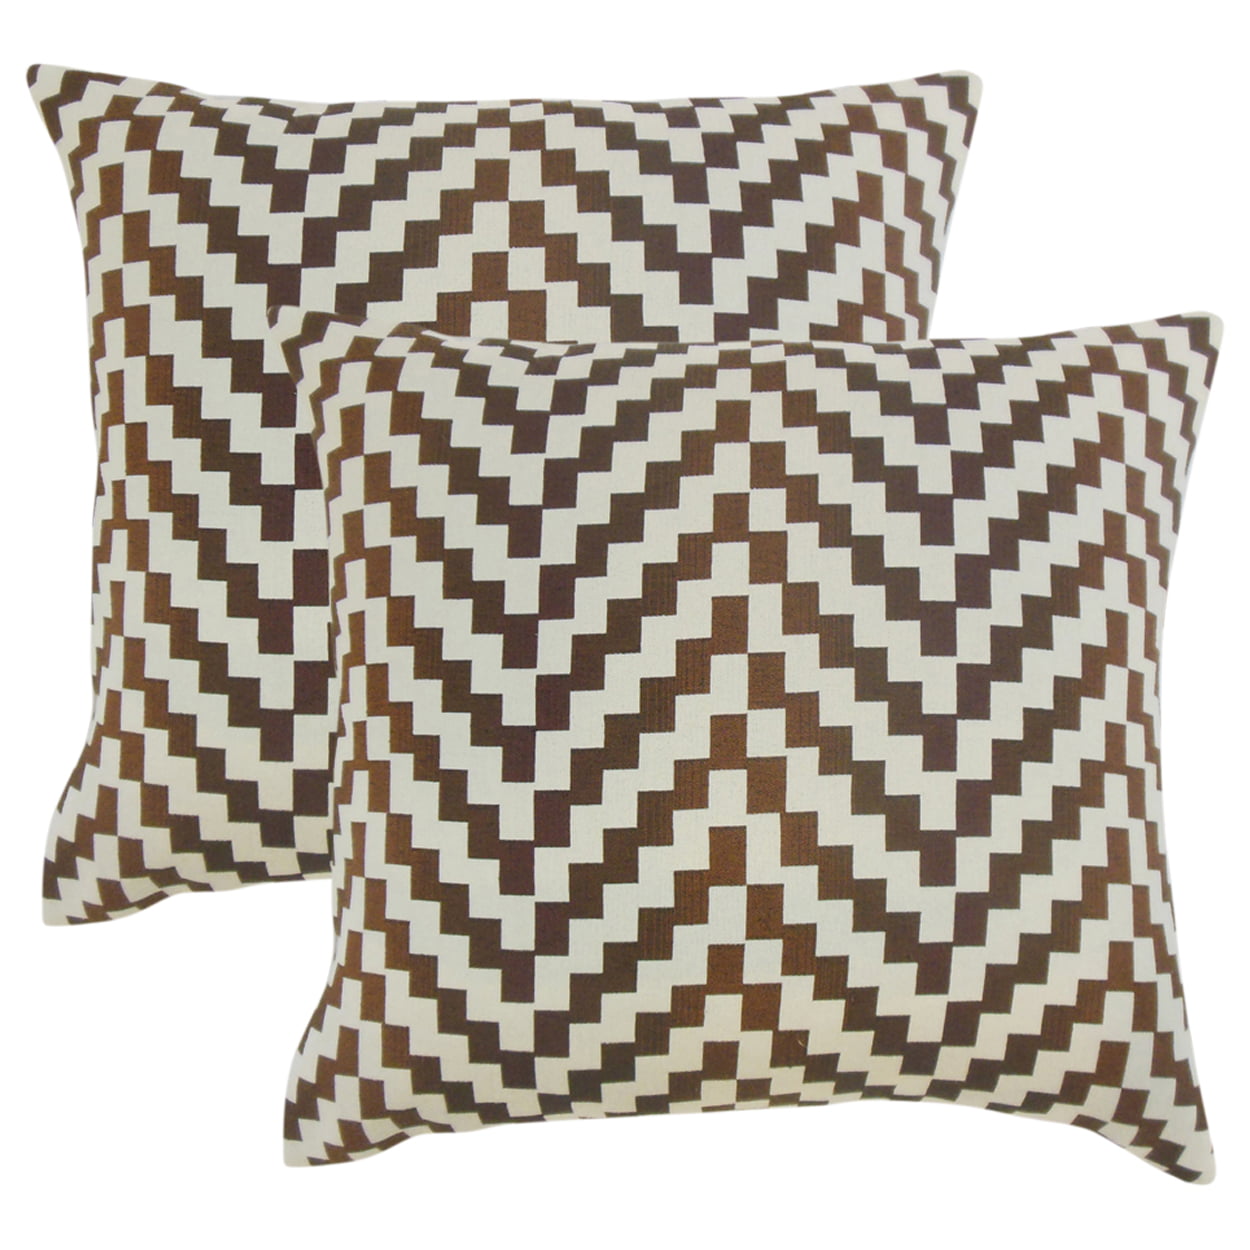 Geranium The Pillow Collection P18-BAR-M9831-GERANIUM-R61P39 Nowles Geometric Pillow 